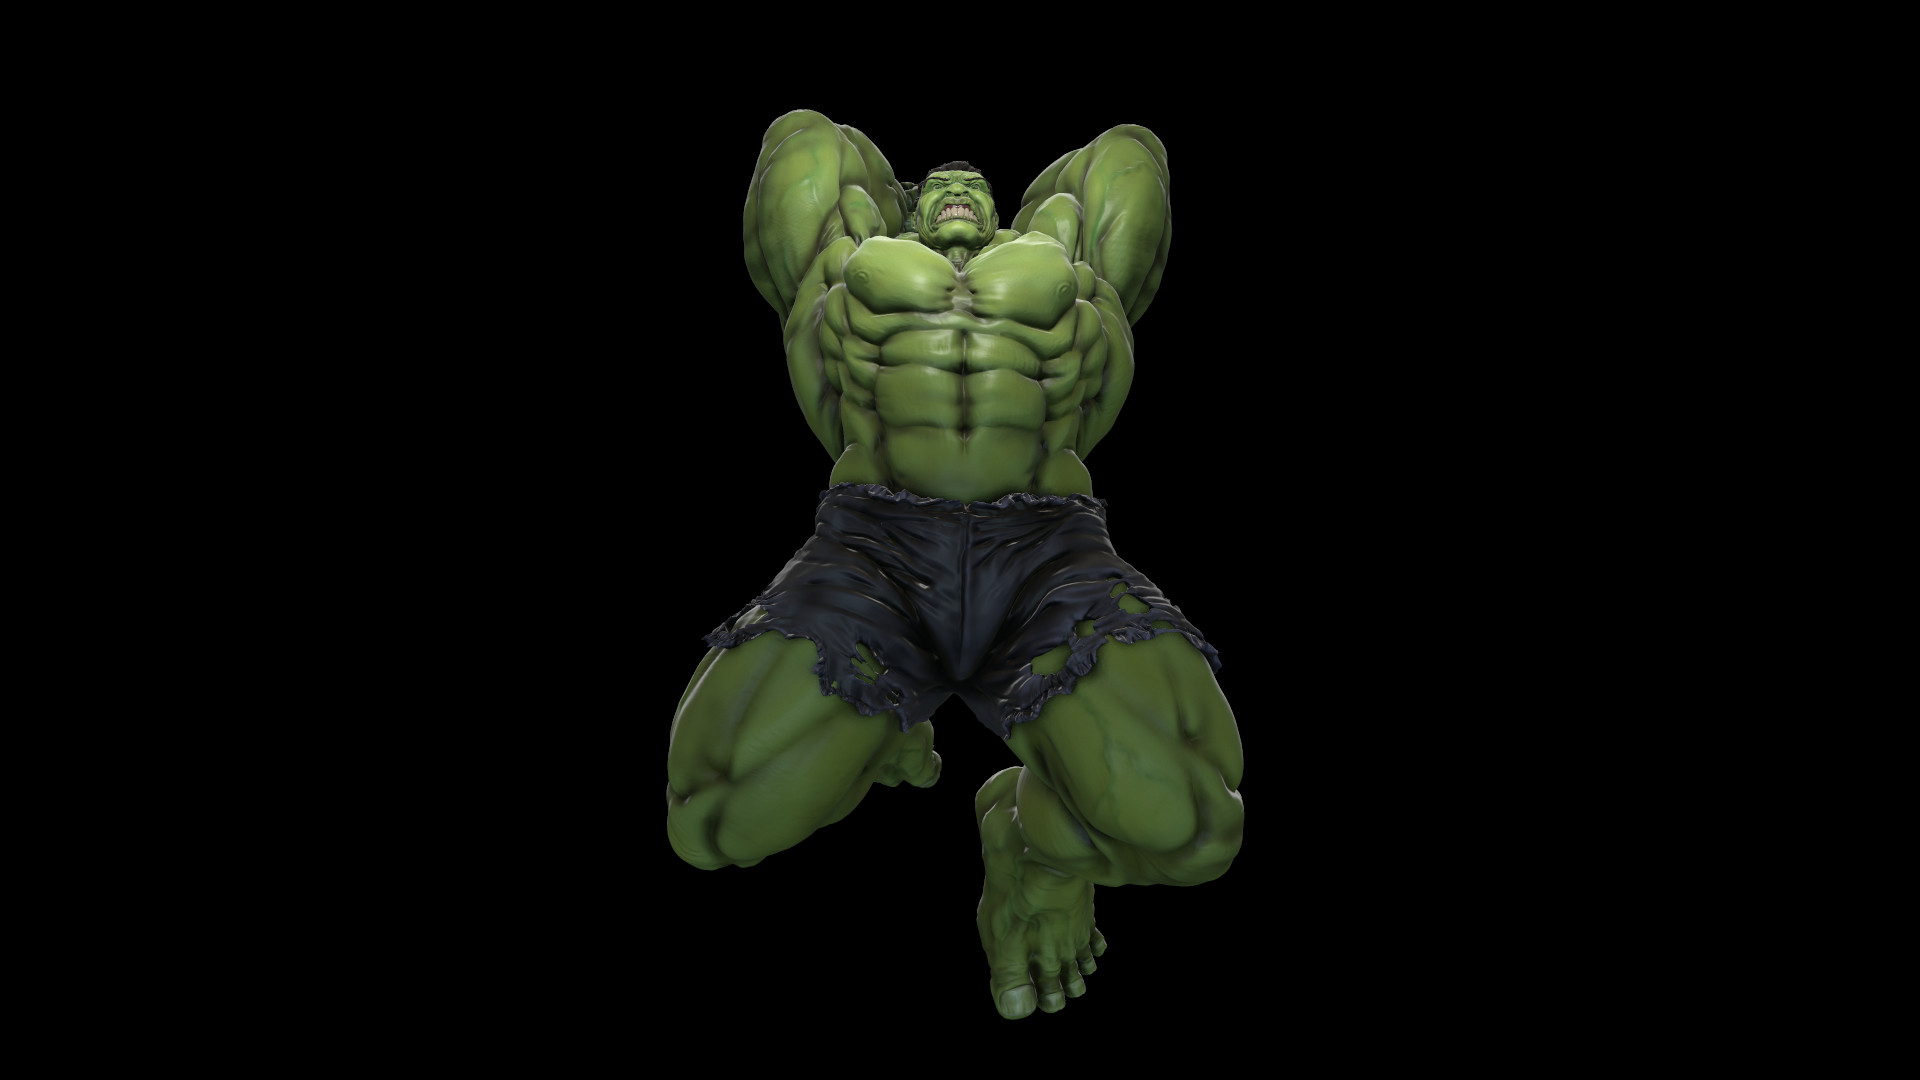 A model of hulk, really angry and doing a smash. 